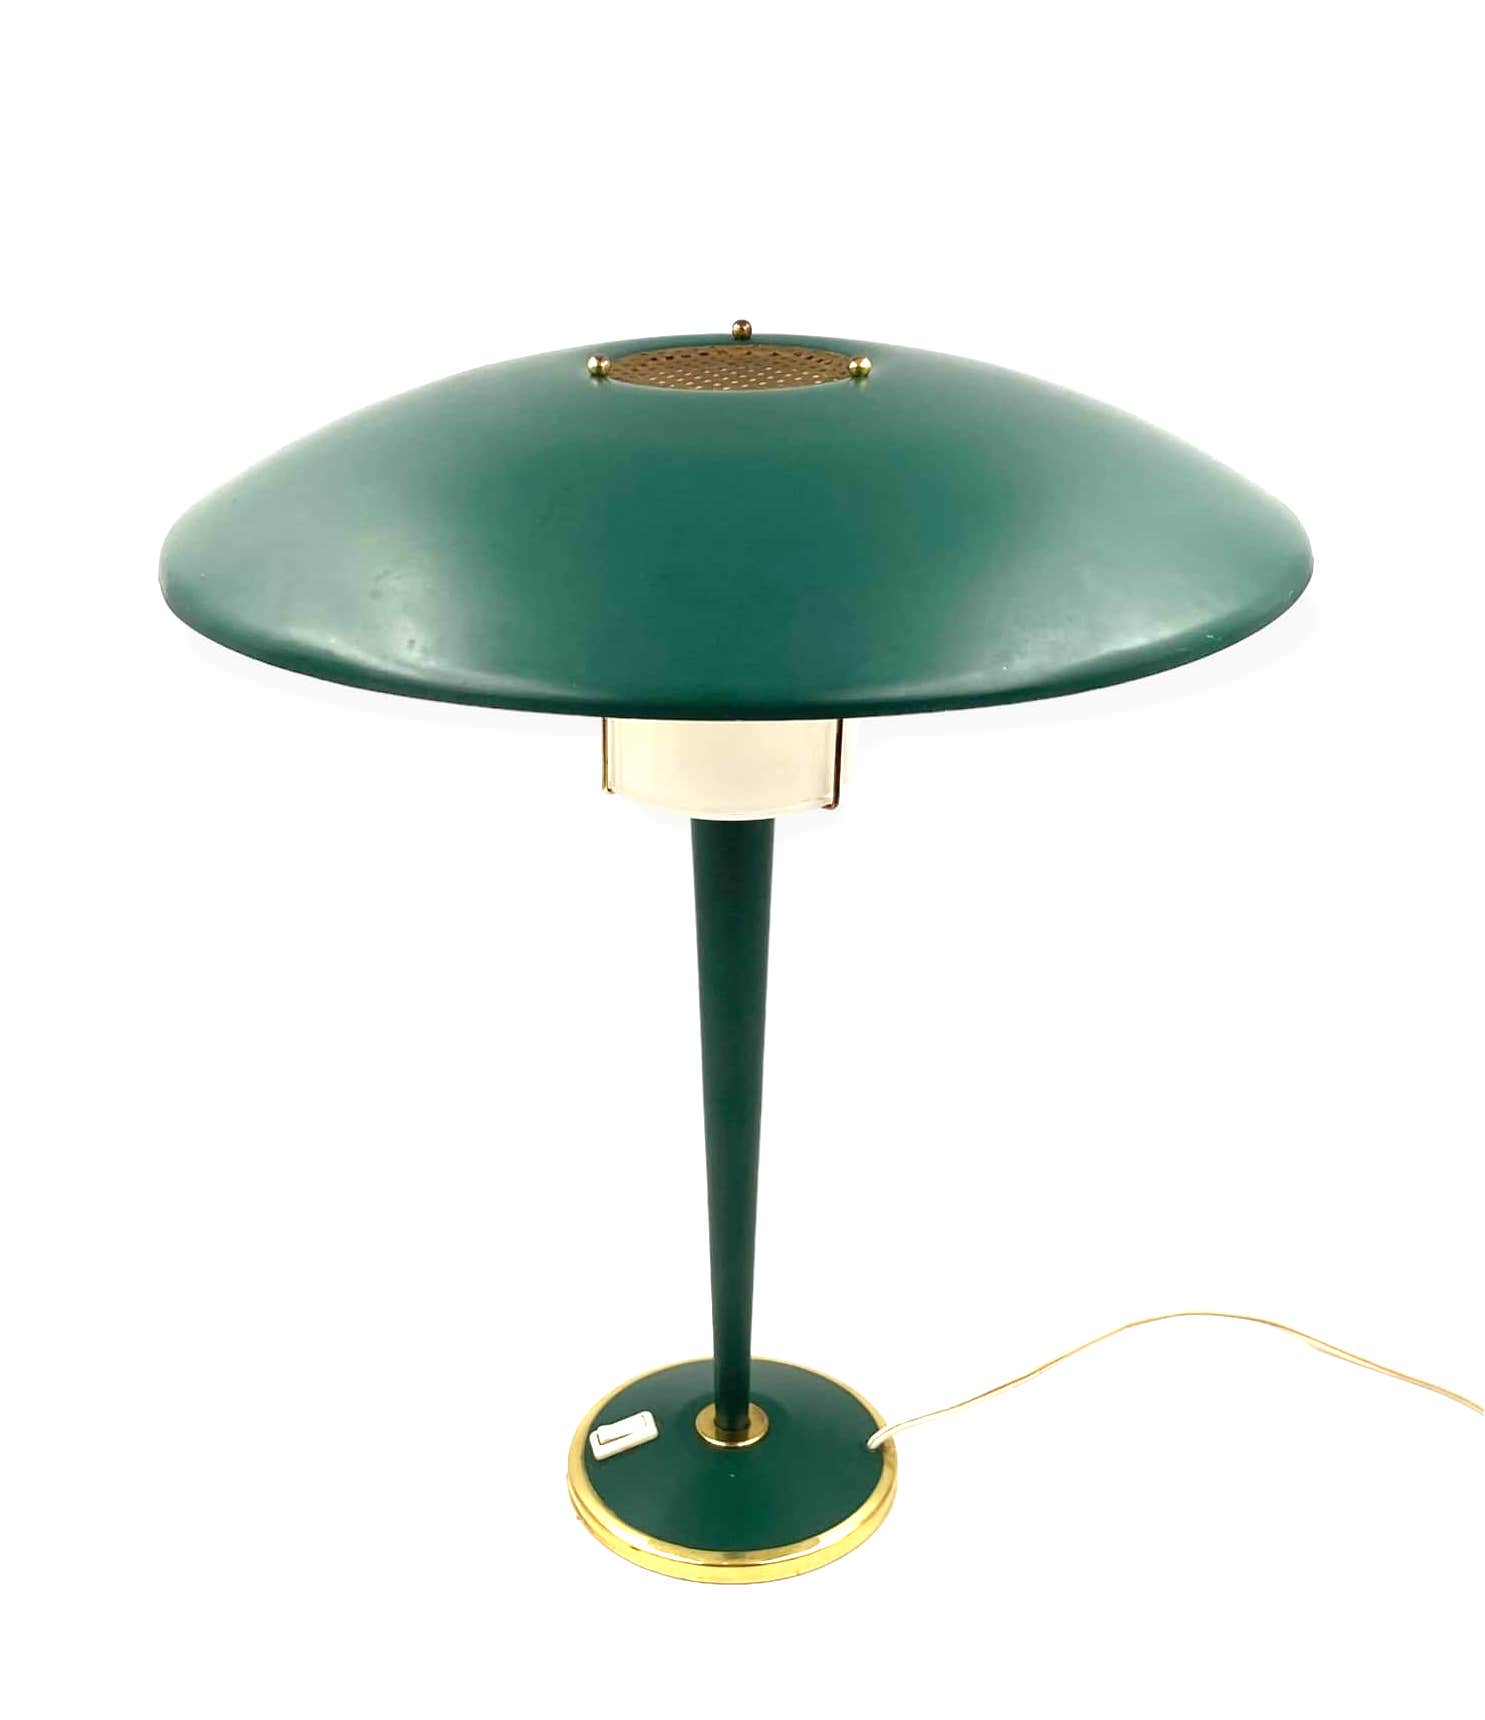 Modernist petrol green table lamp, France 1960s